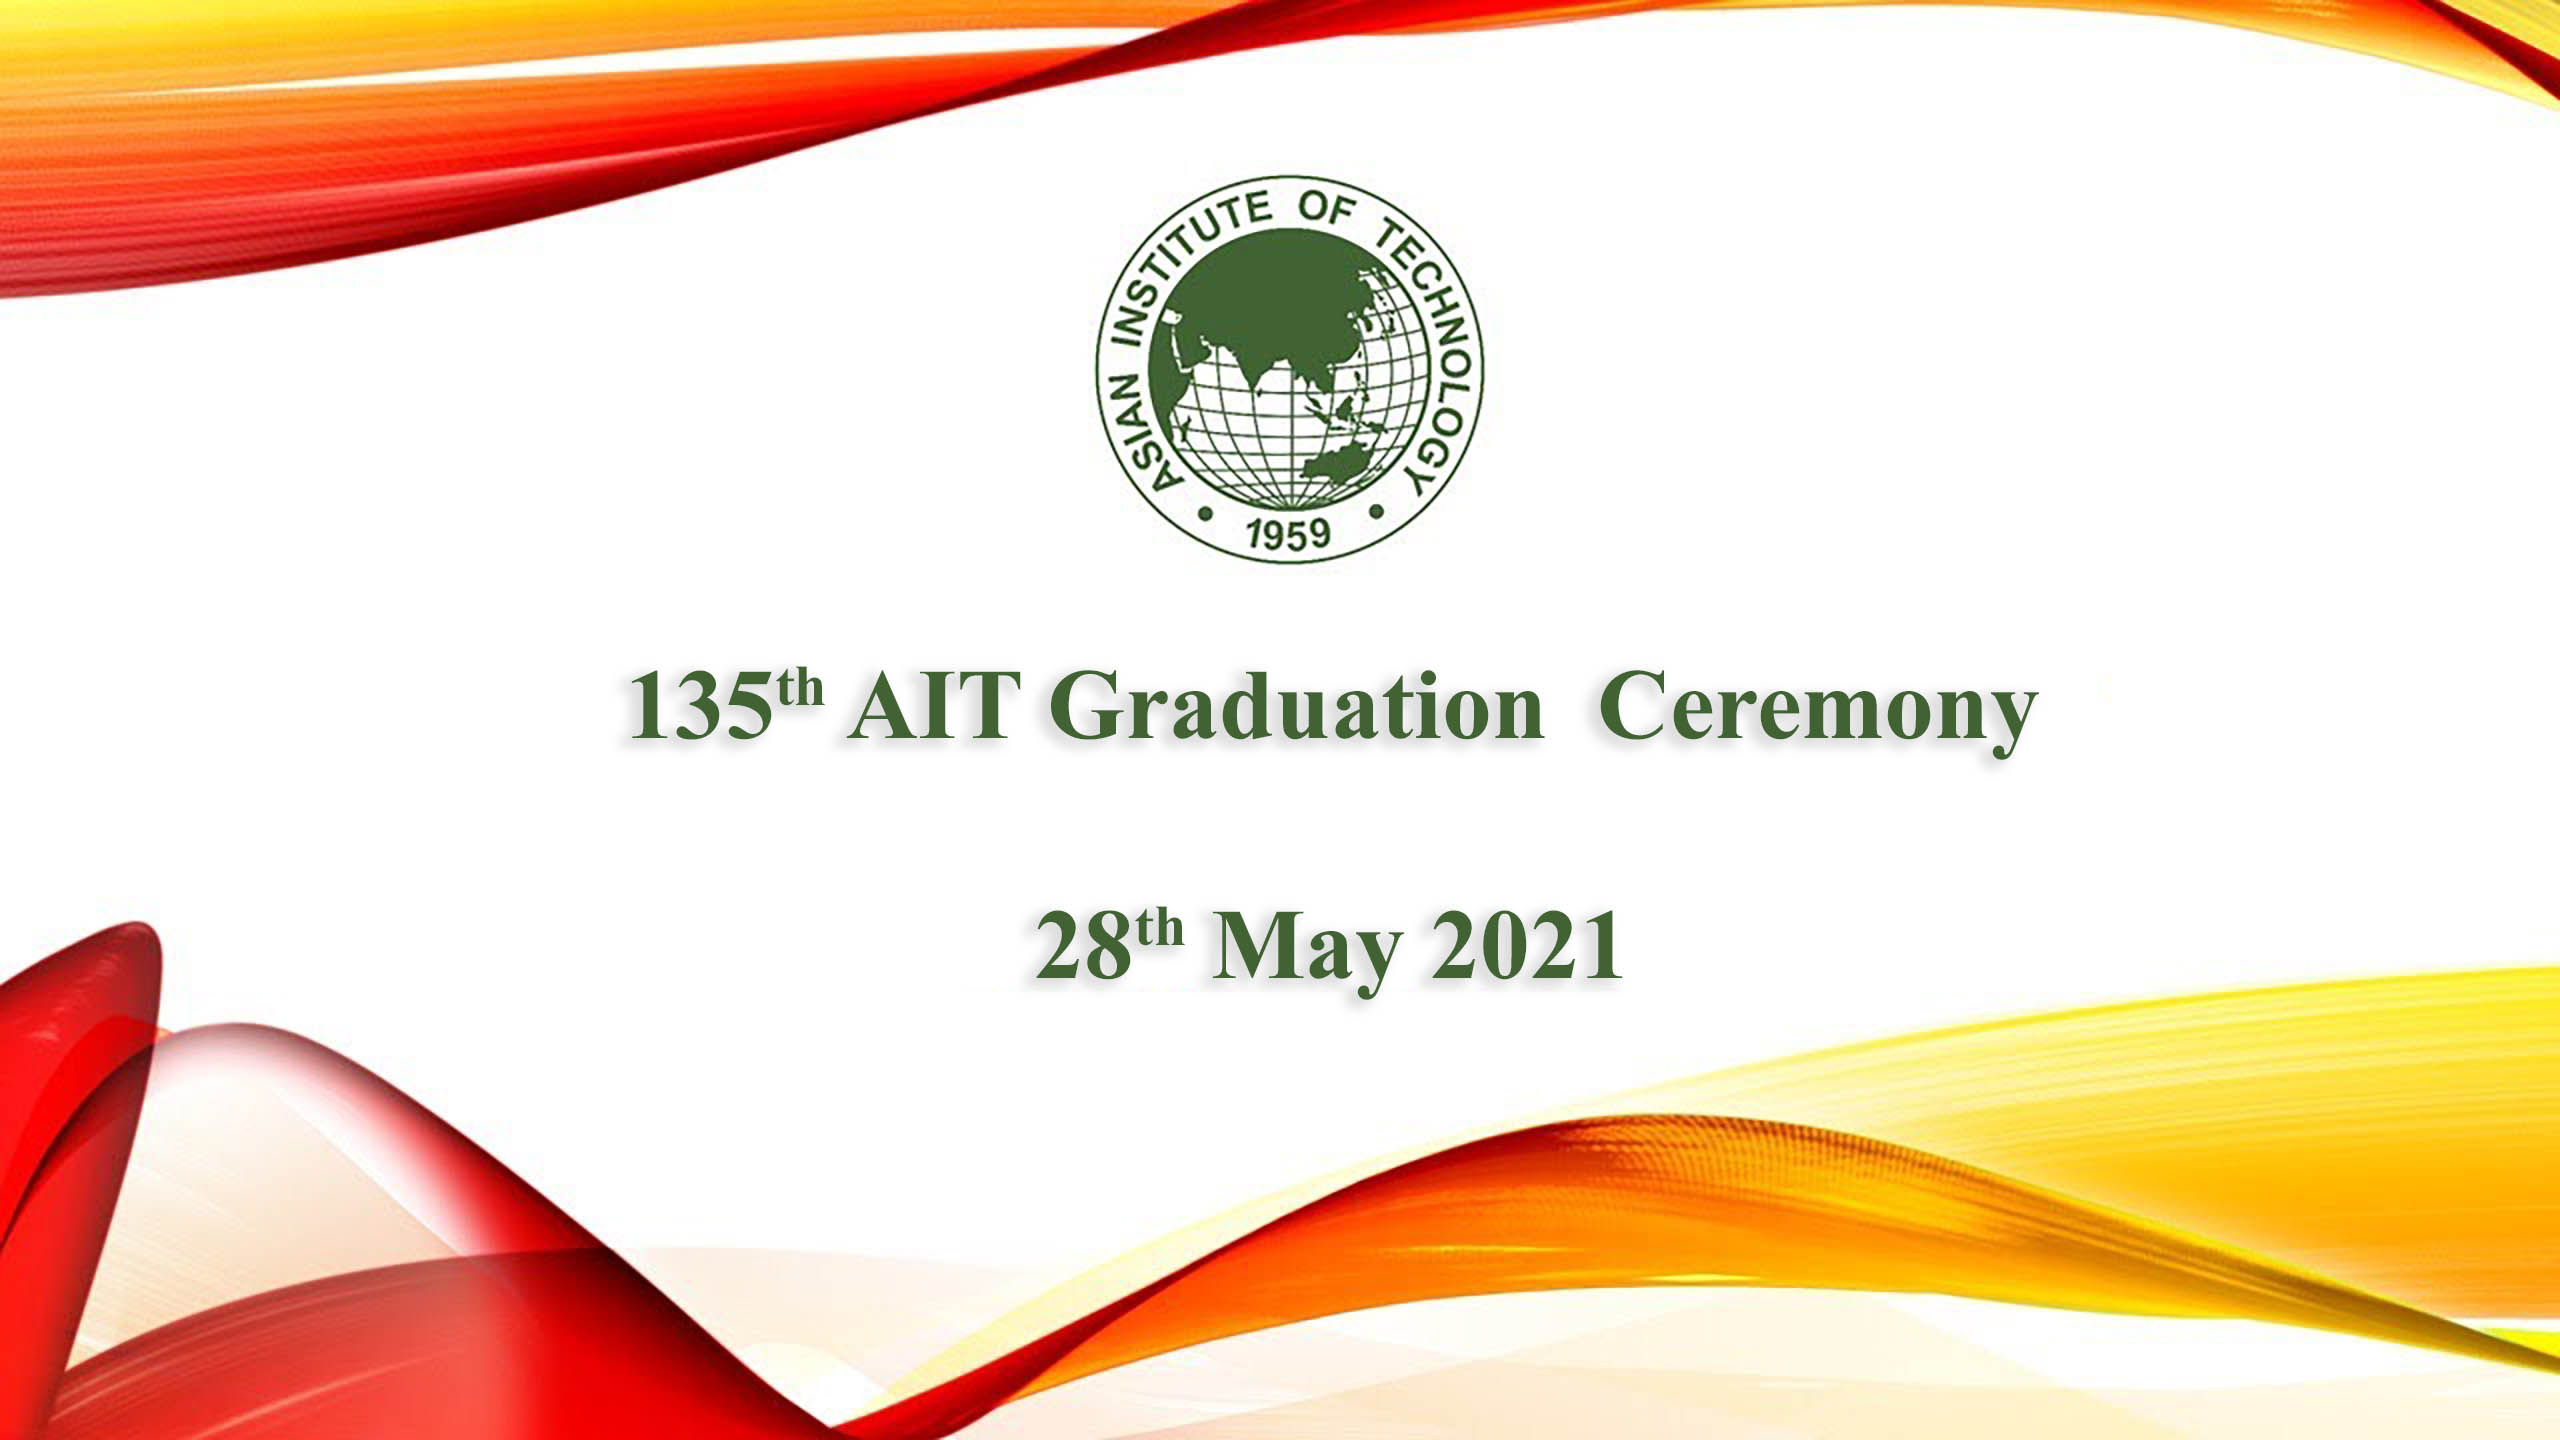 135th AIT Graduation Ceremony embraces the New Normal